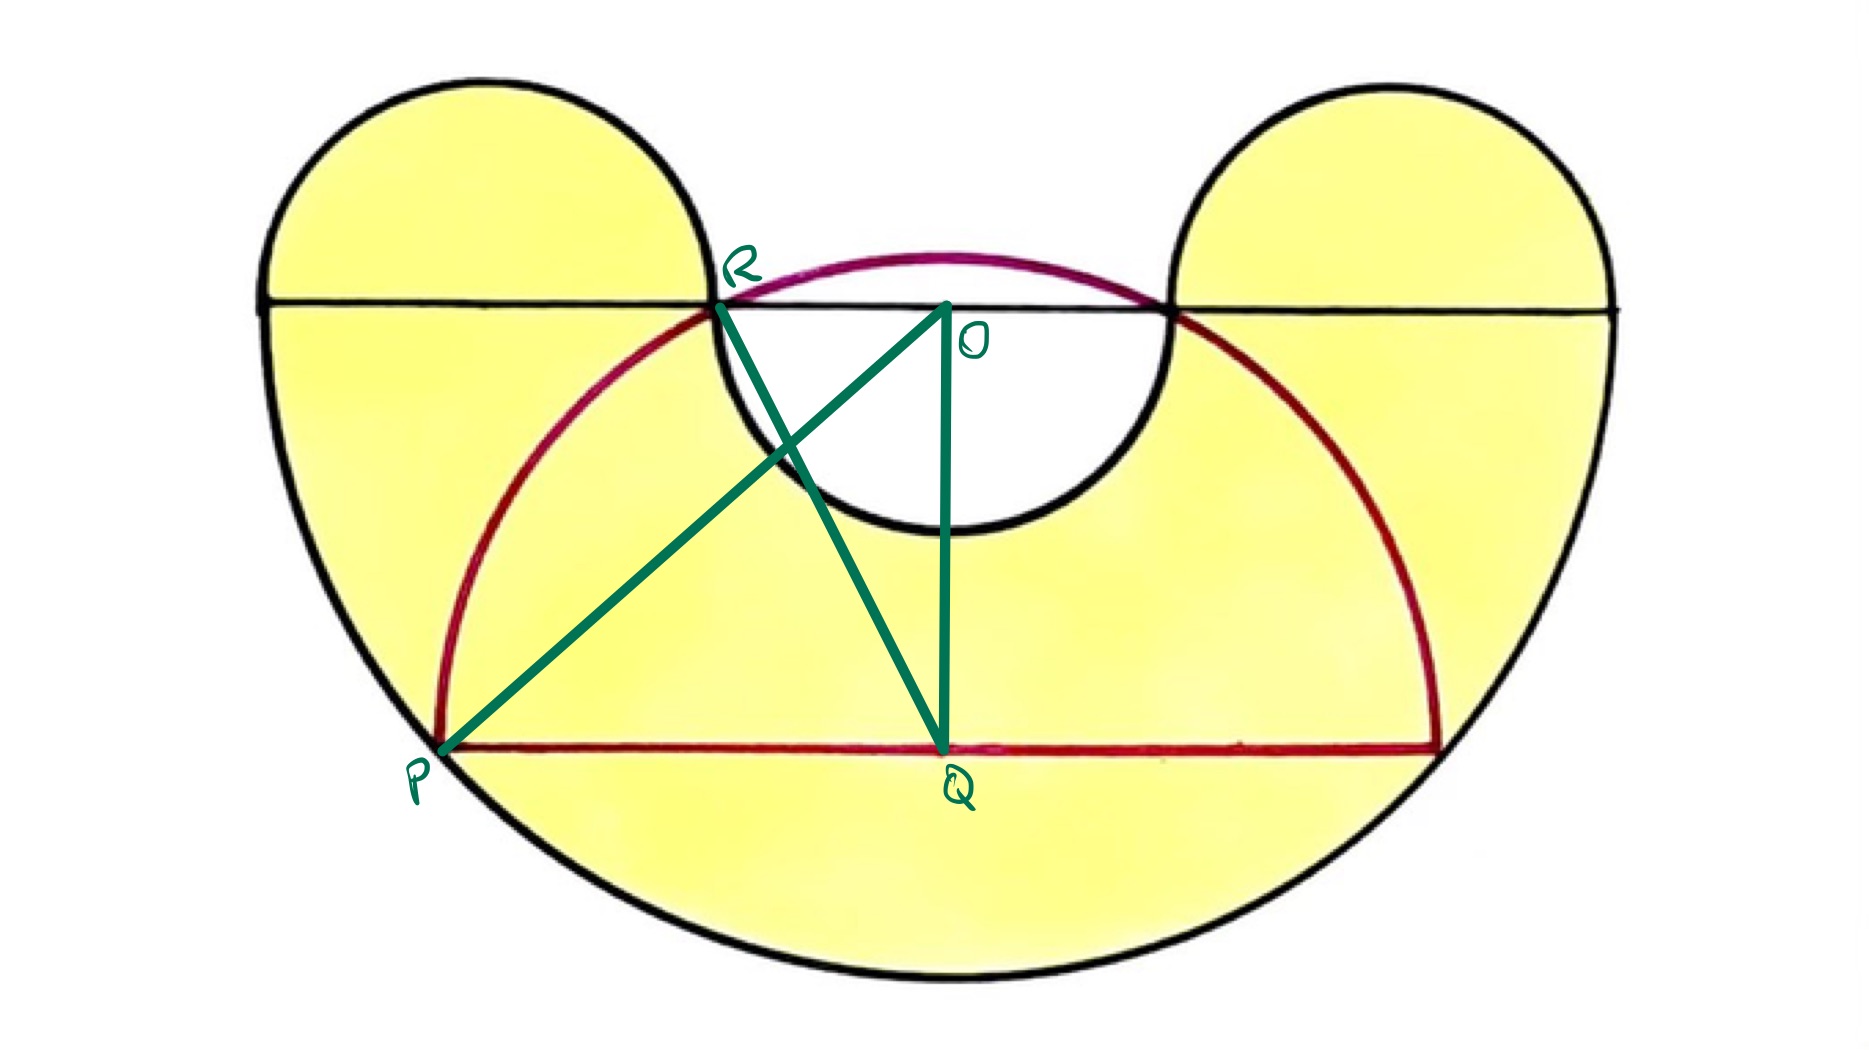 Multiple semi-circles iv labelled